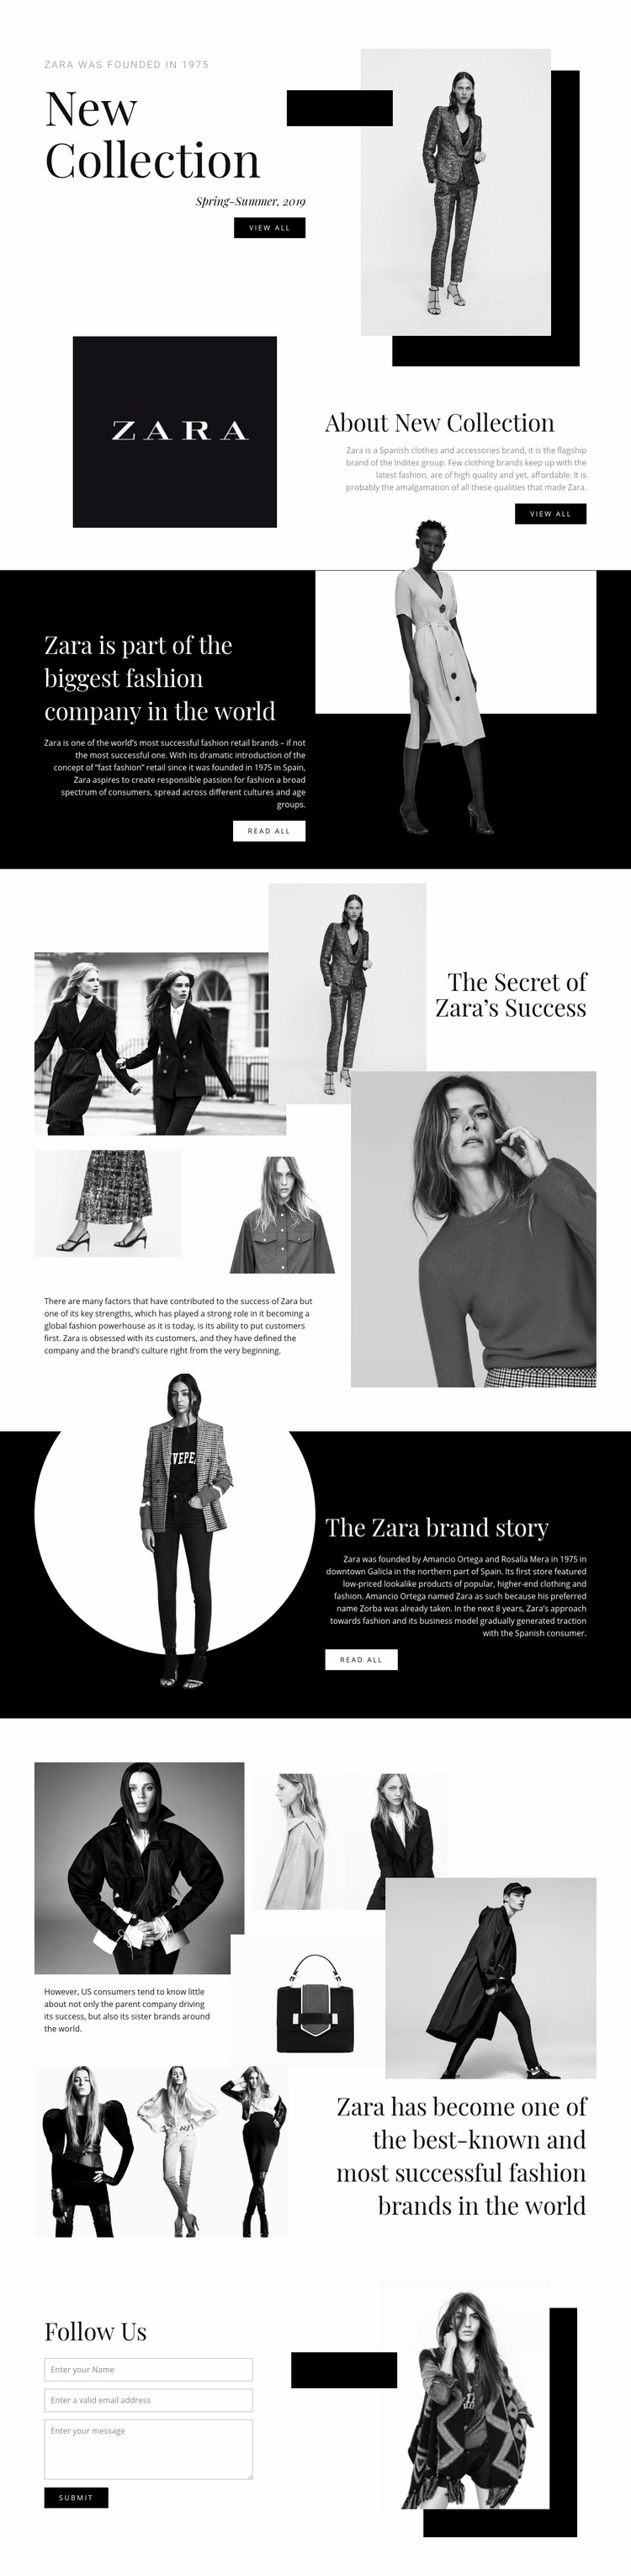 Zara collection Web Page Design